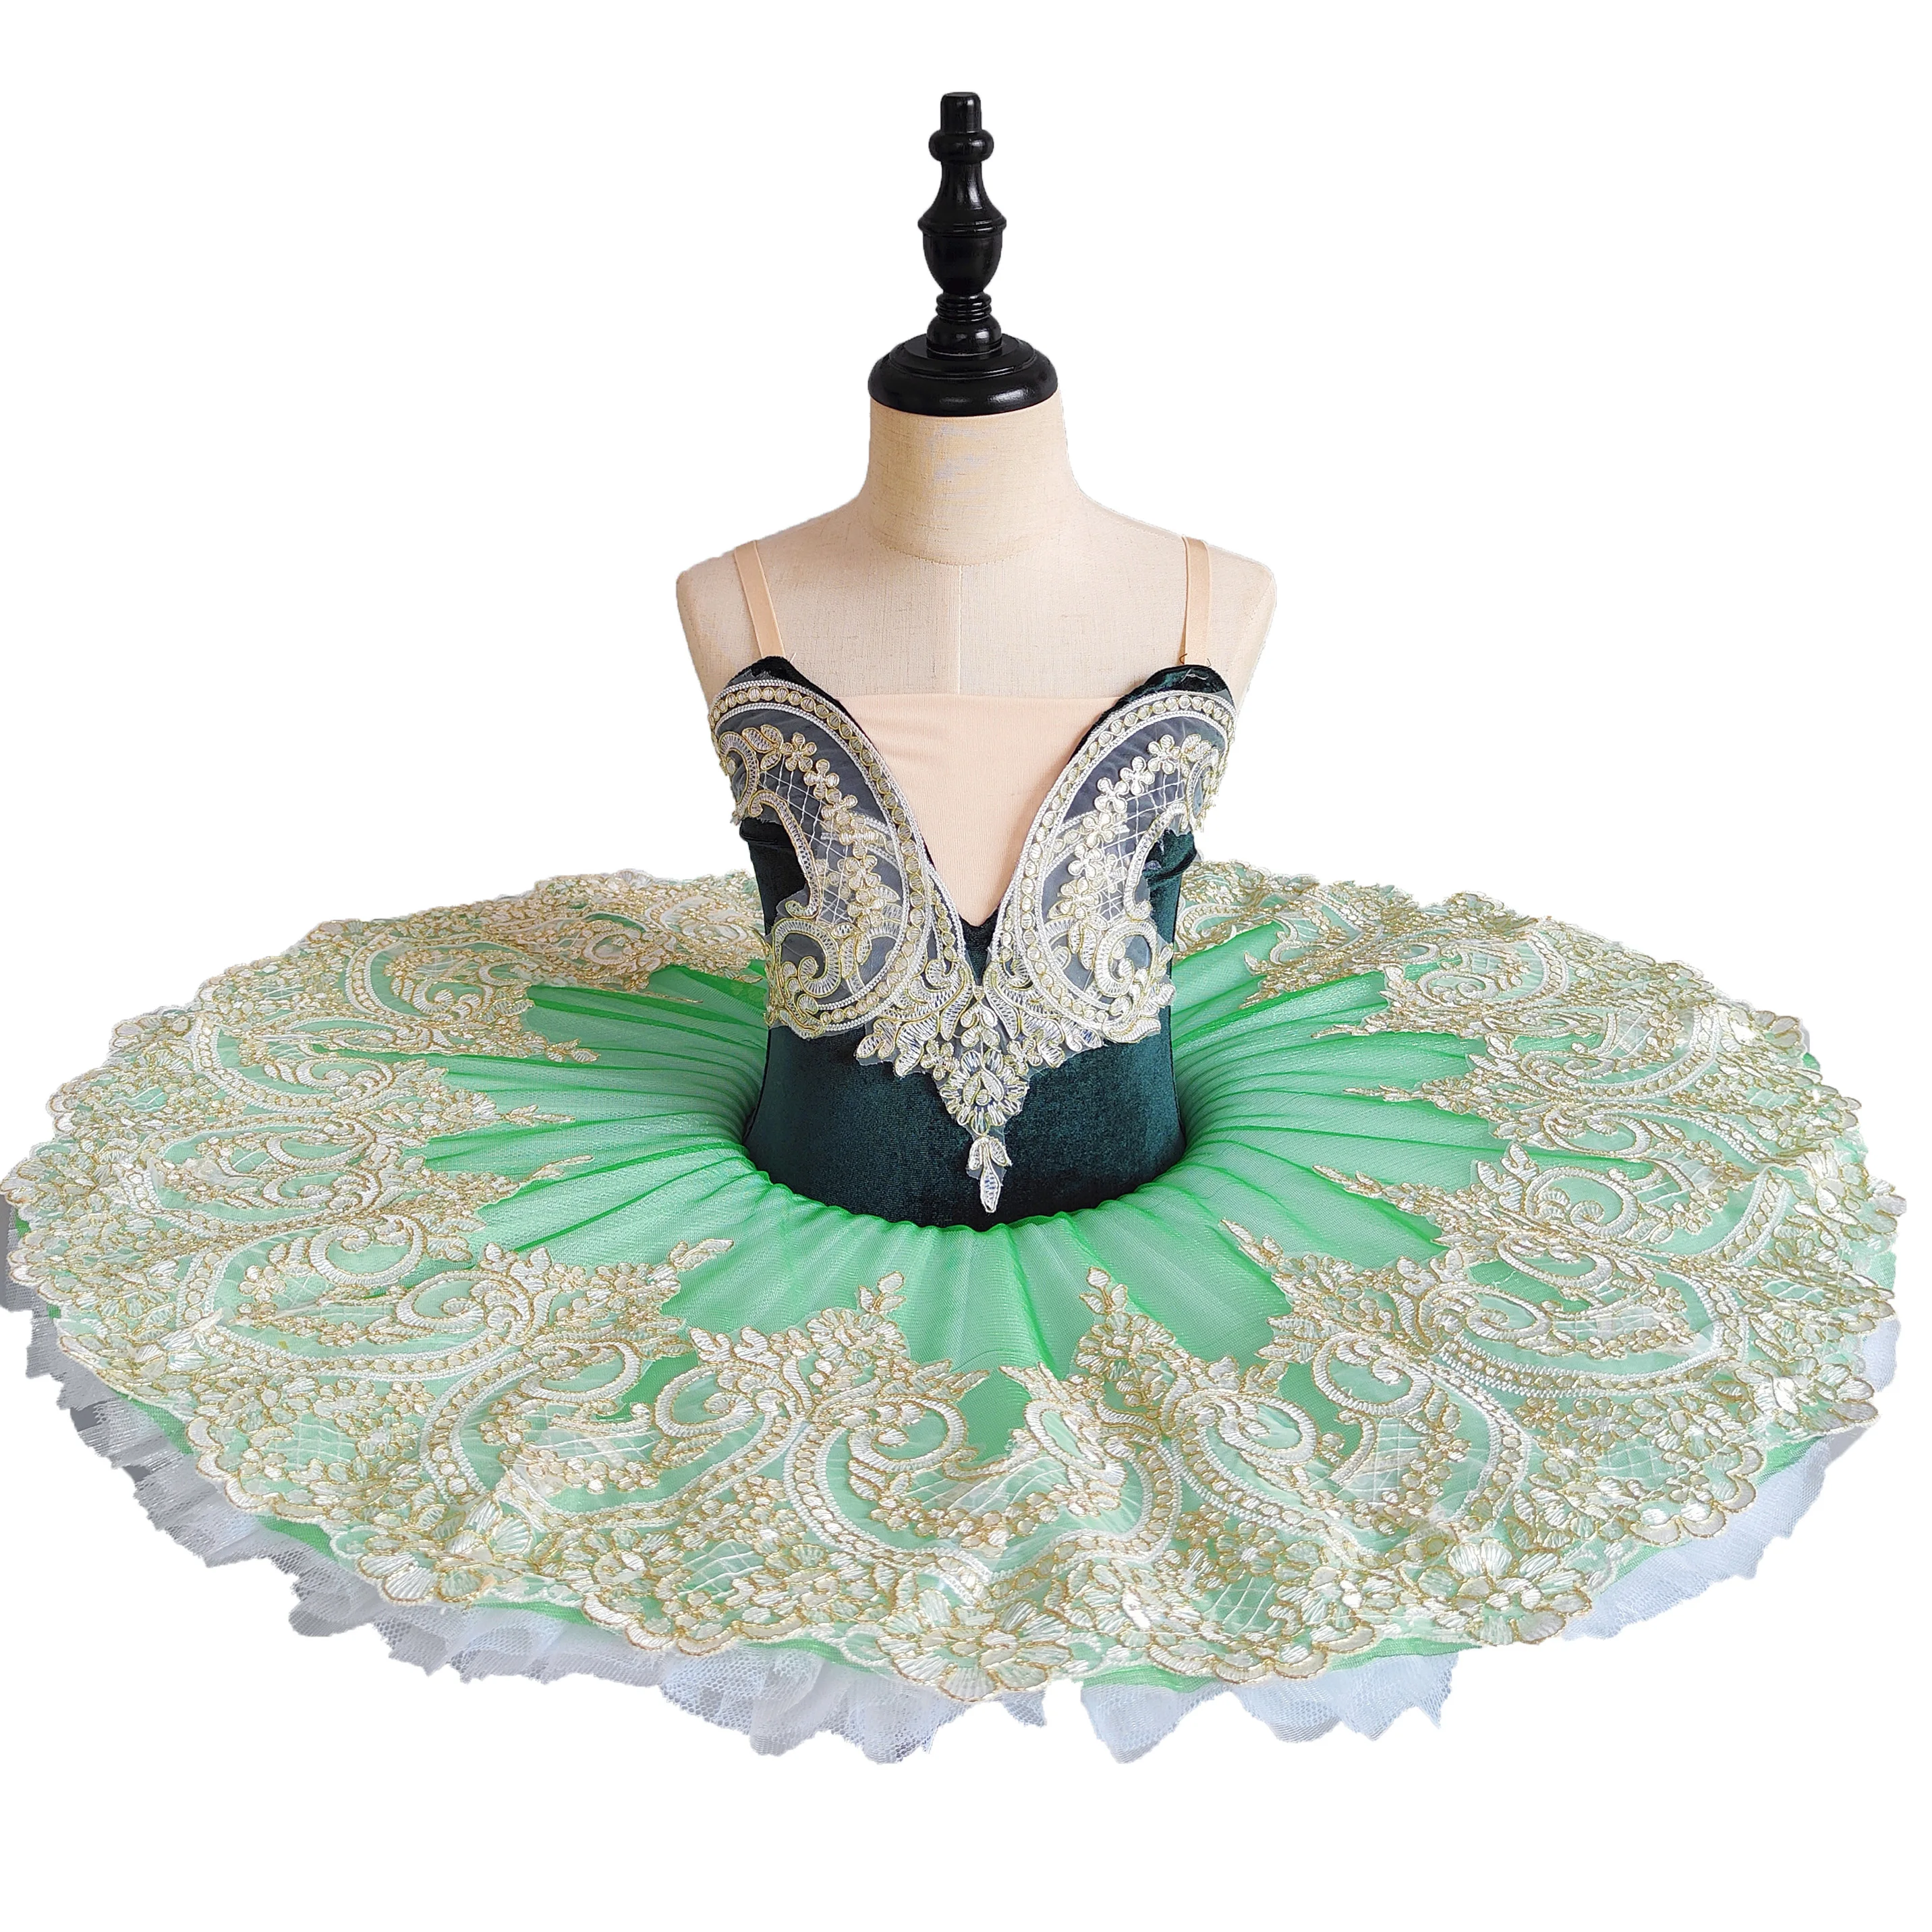 

Children's Professional Ballet Dance Dress Little Swan Tulle Tutu Tutu Skirt Performance Wear Green Sleeping Beauty Stage’